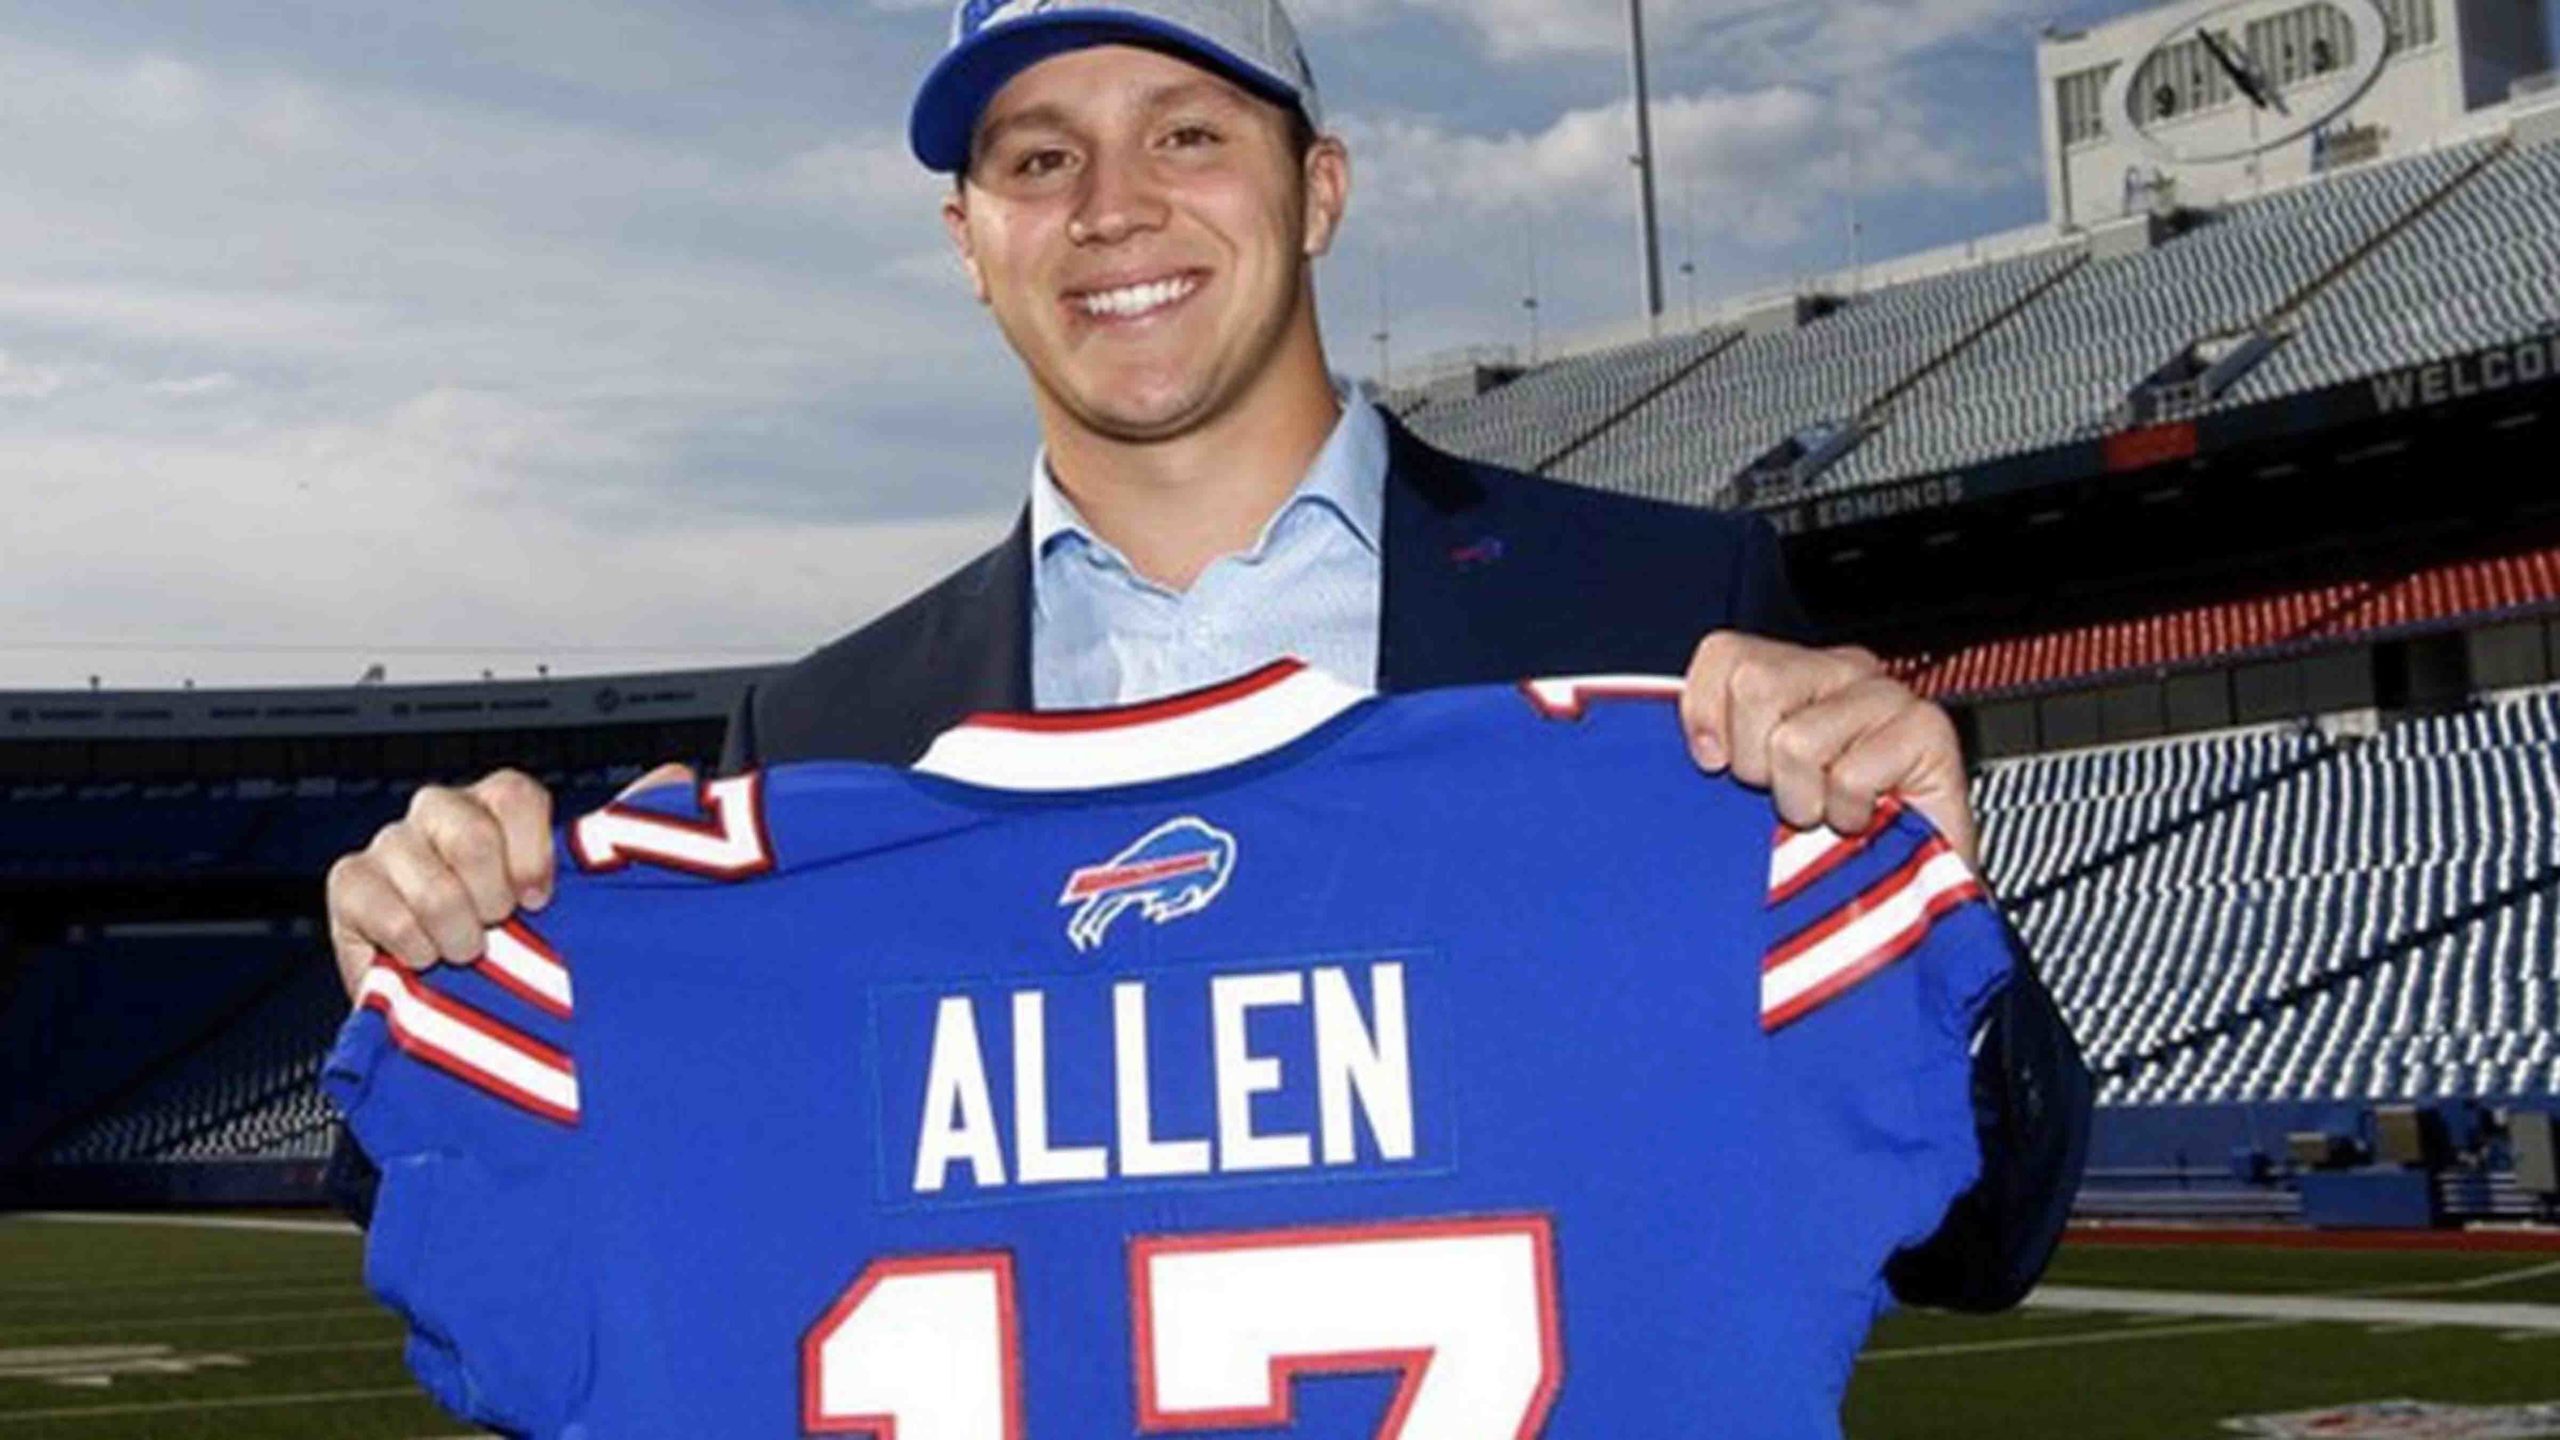 Josh Allen leads all NFL players in jersey sales